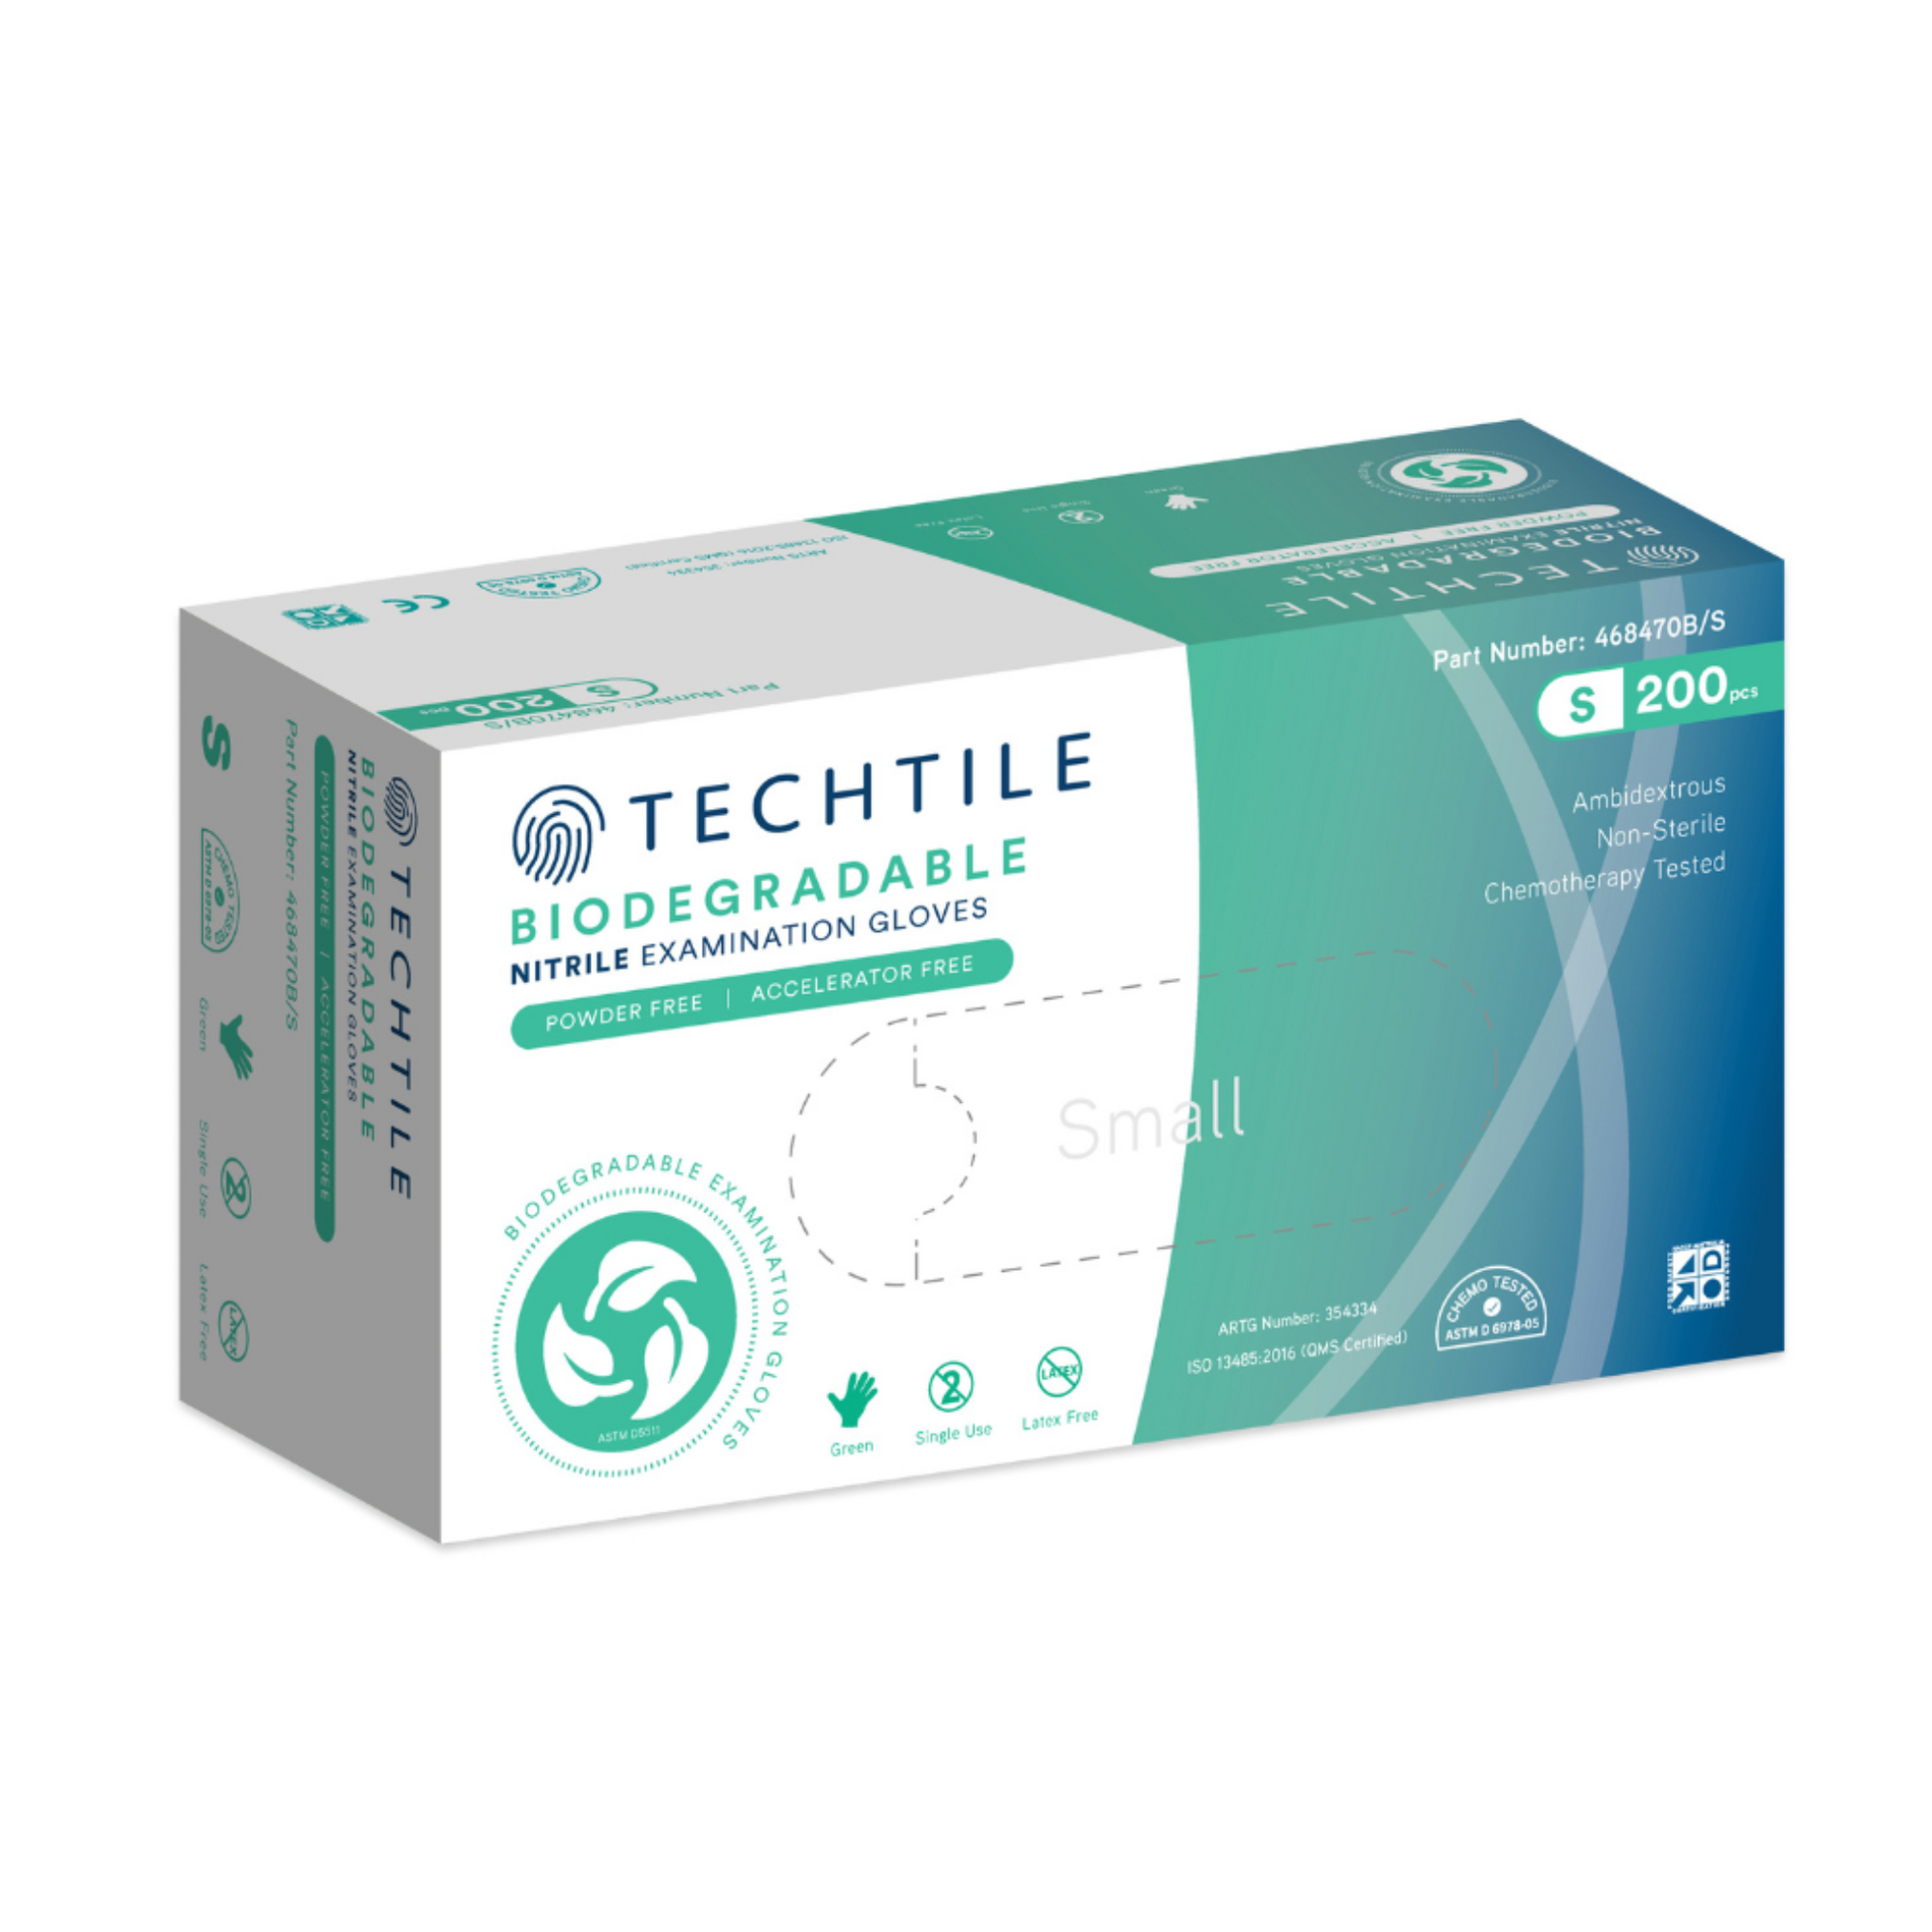 Techtile Biodegradable Nitrile Gloves S - Box (200pc)